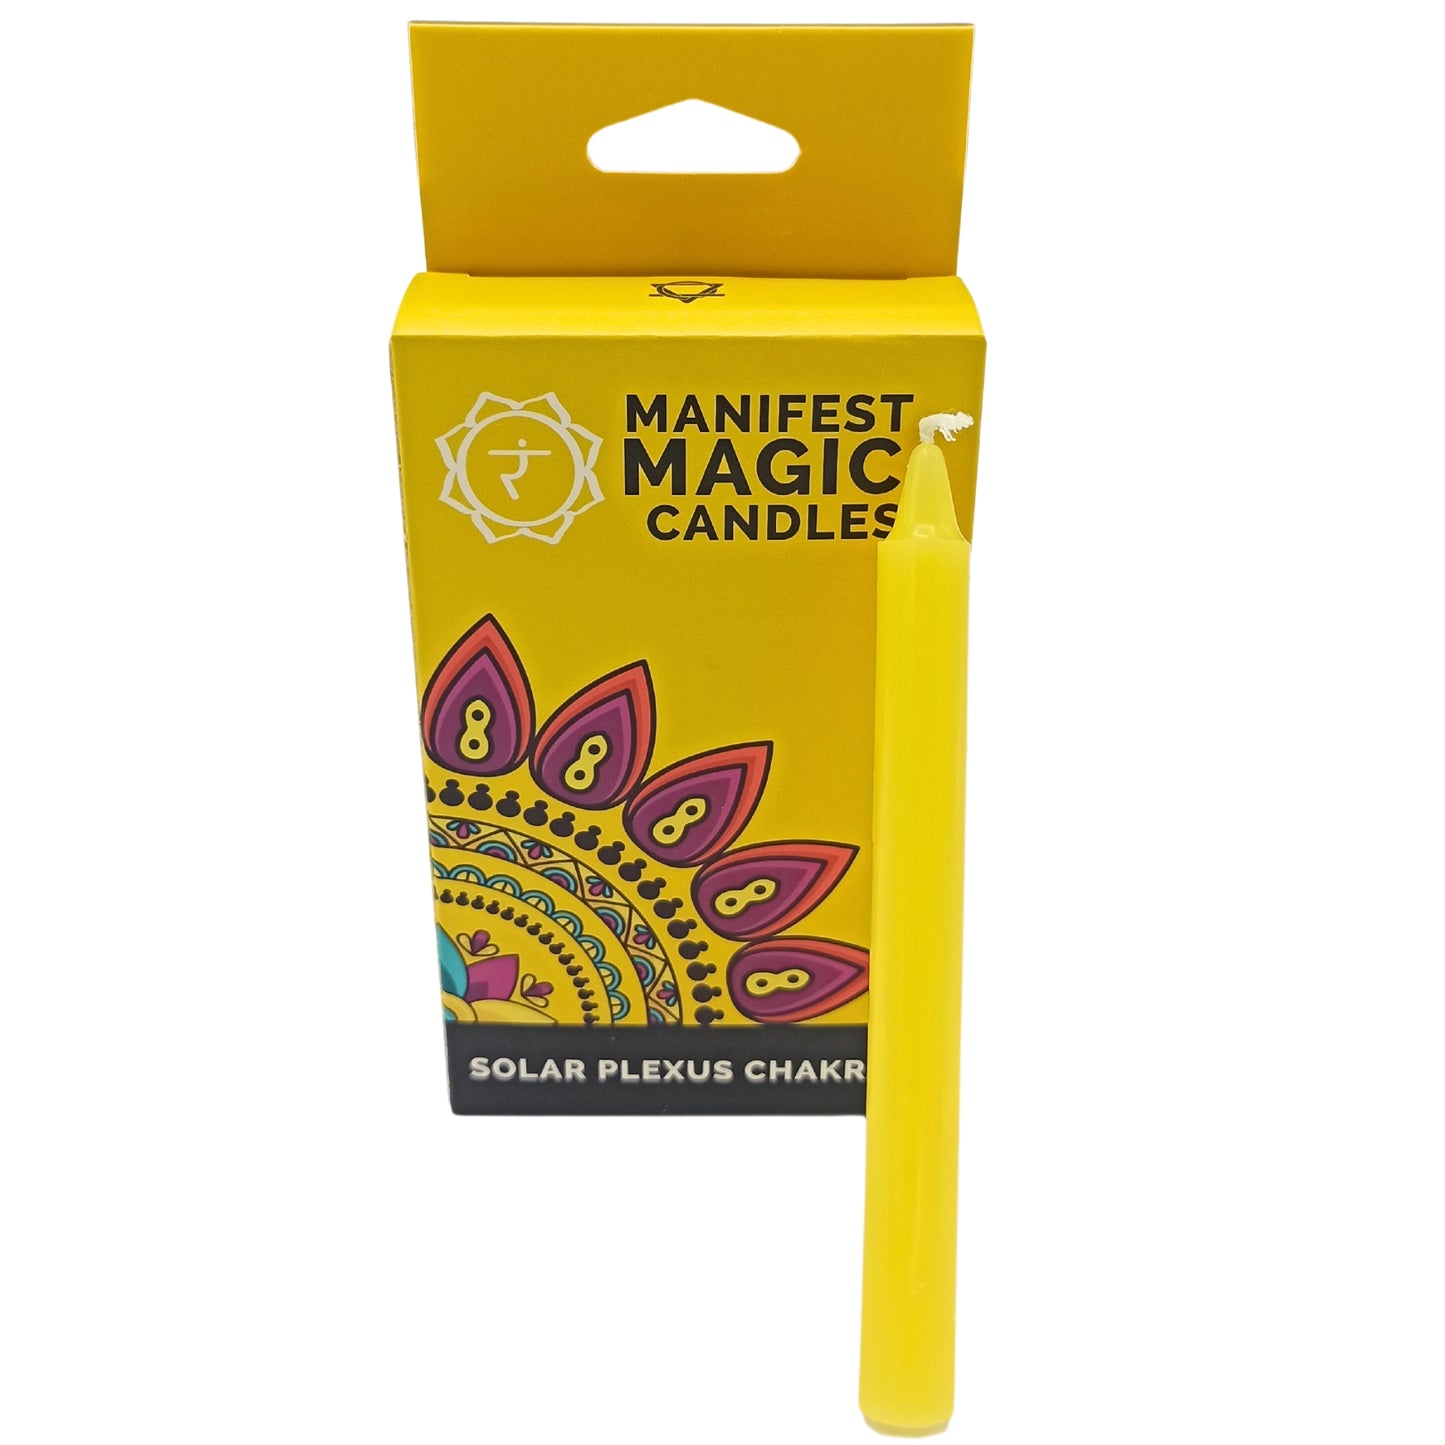 Manifest Magic Candles (pack of 12) - Yellow - Solar Plexus Chakra - Kaftans direct